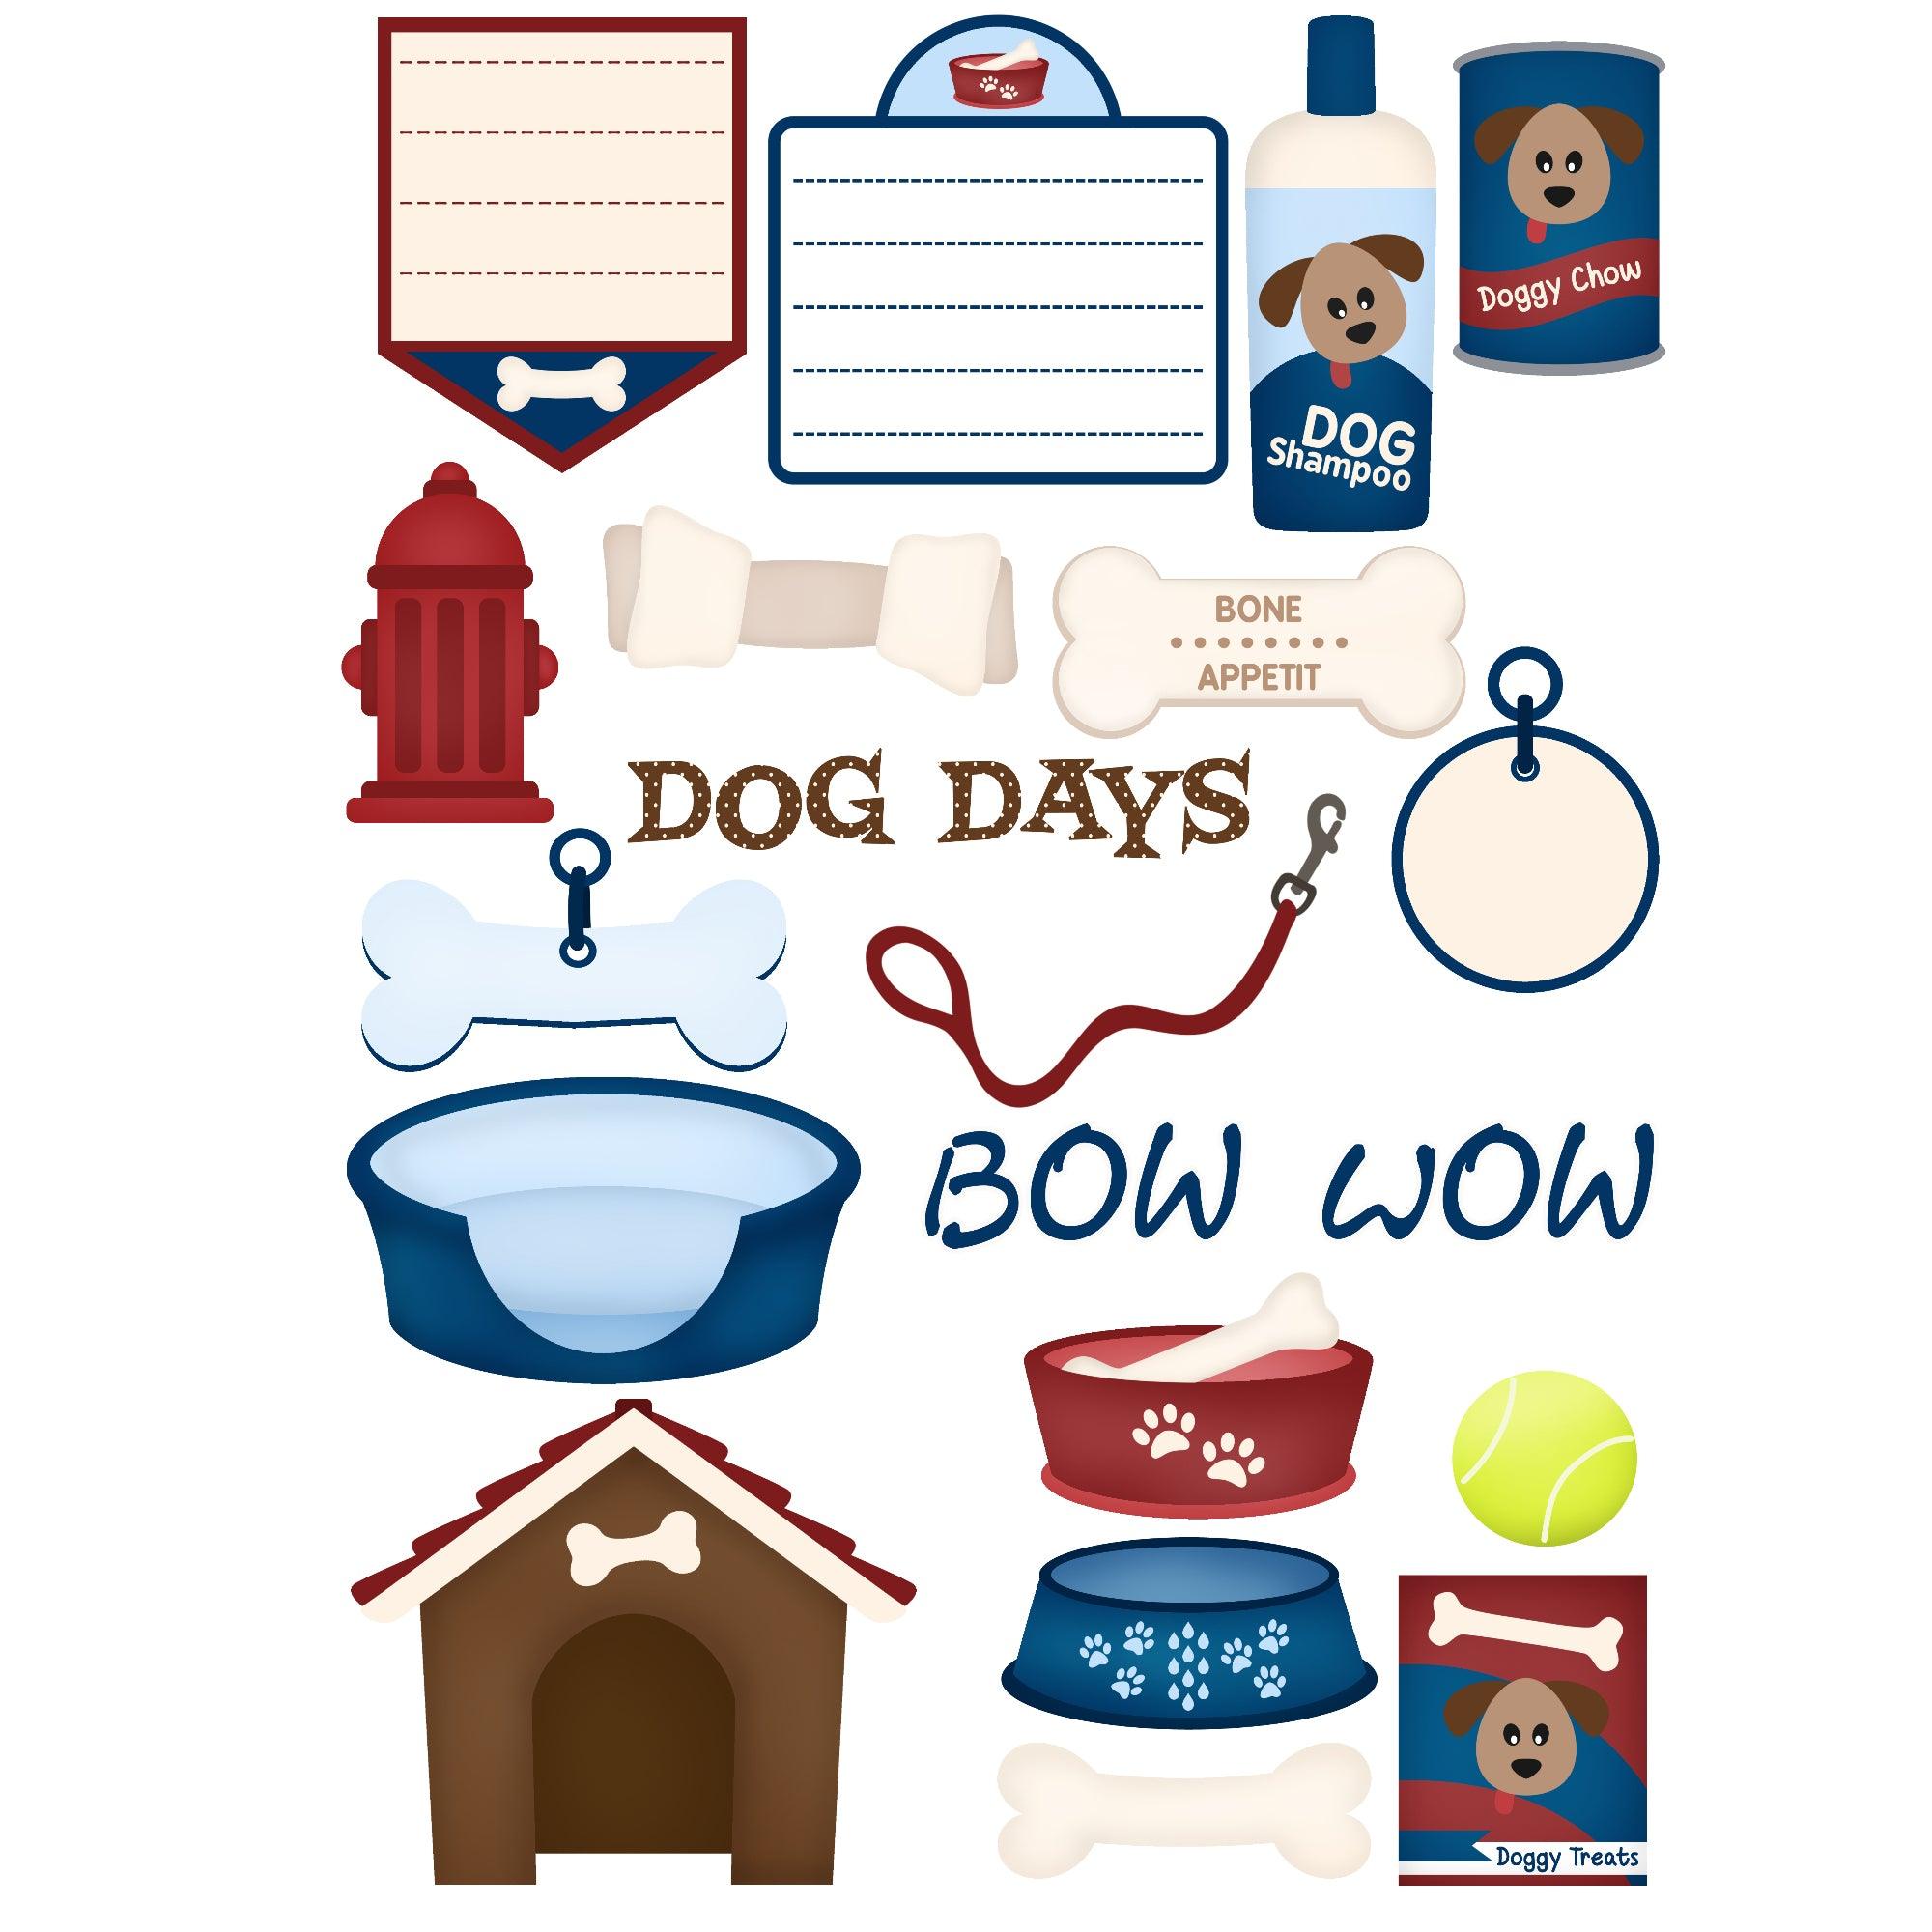 Dog Days 12 x 12 Scrapbook Paper & Embellishment Kit by SSC Designs - Scrapbook Supply Companies